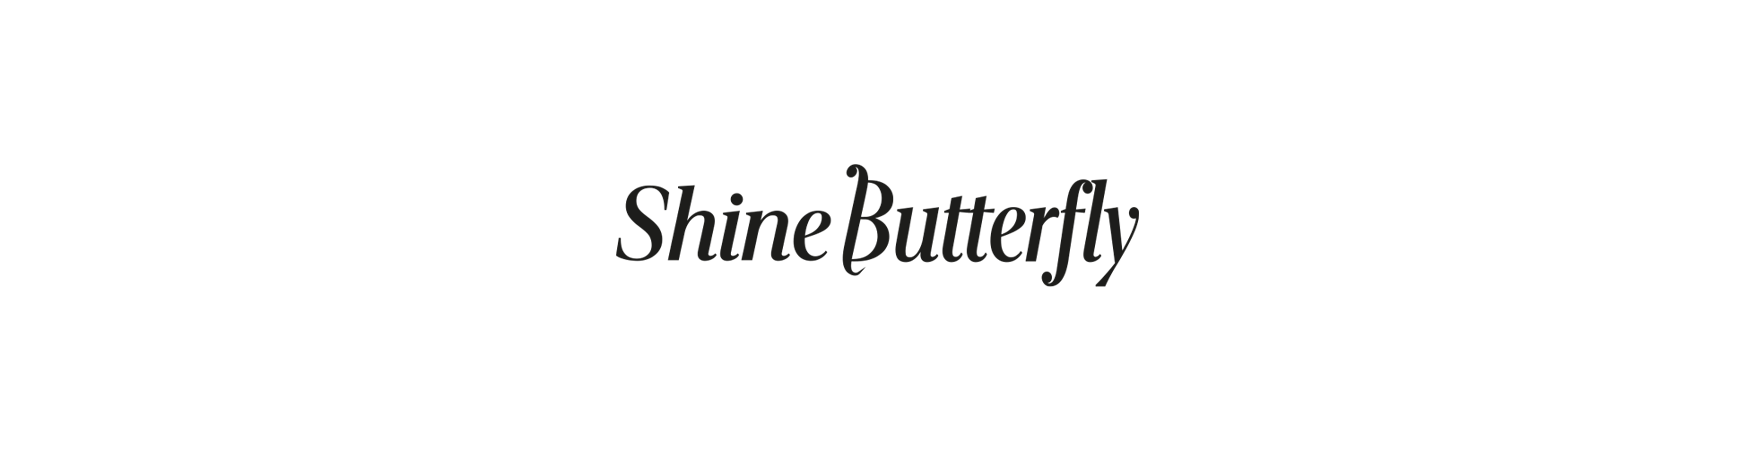 Shine Butterfly